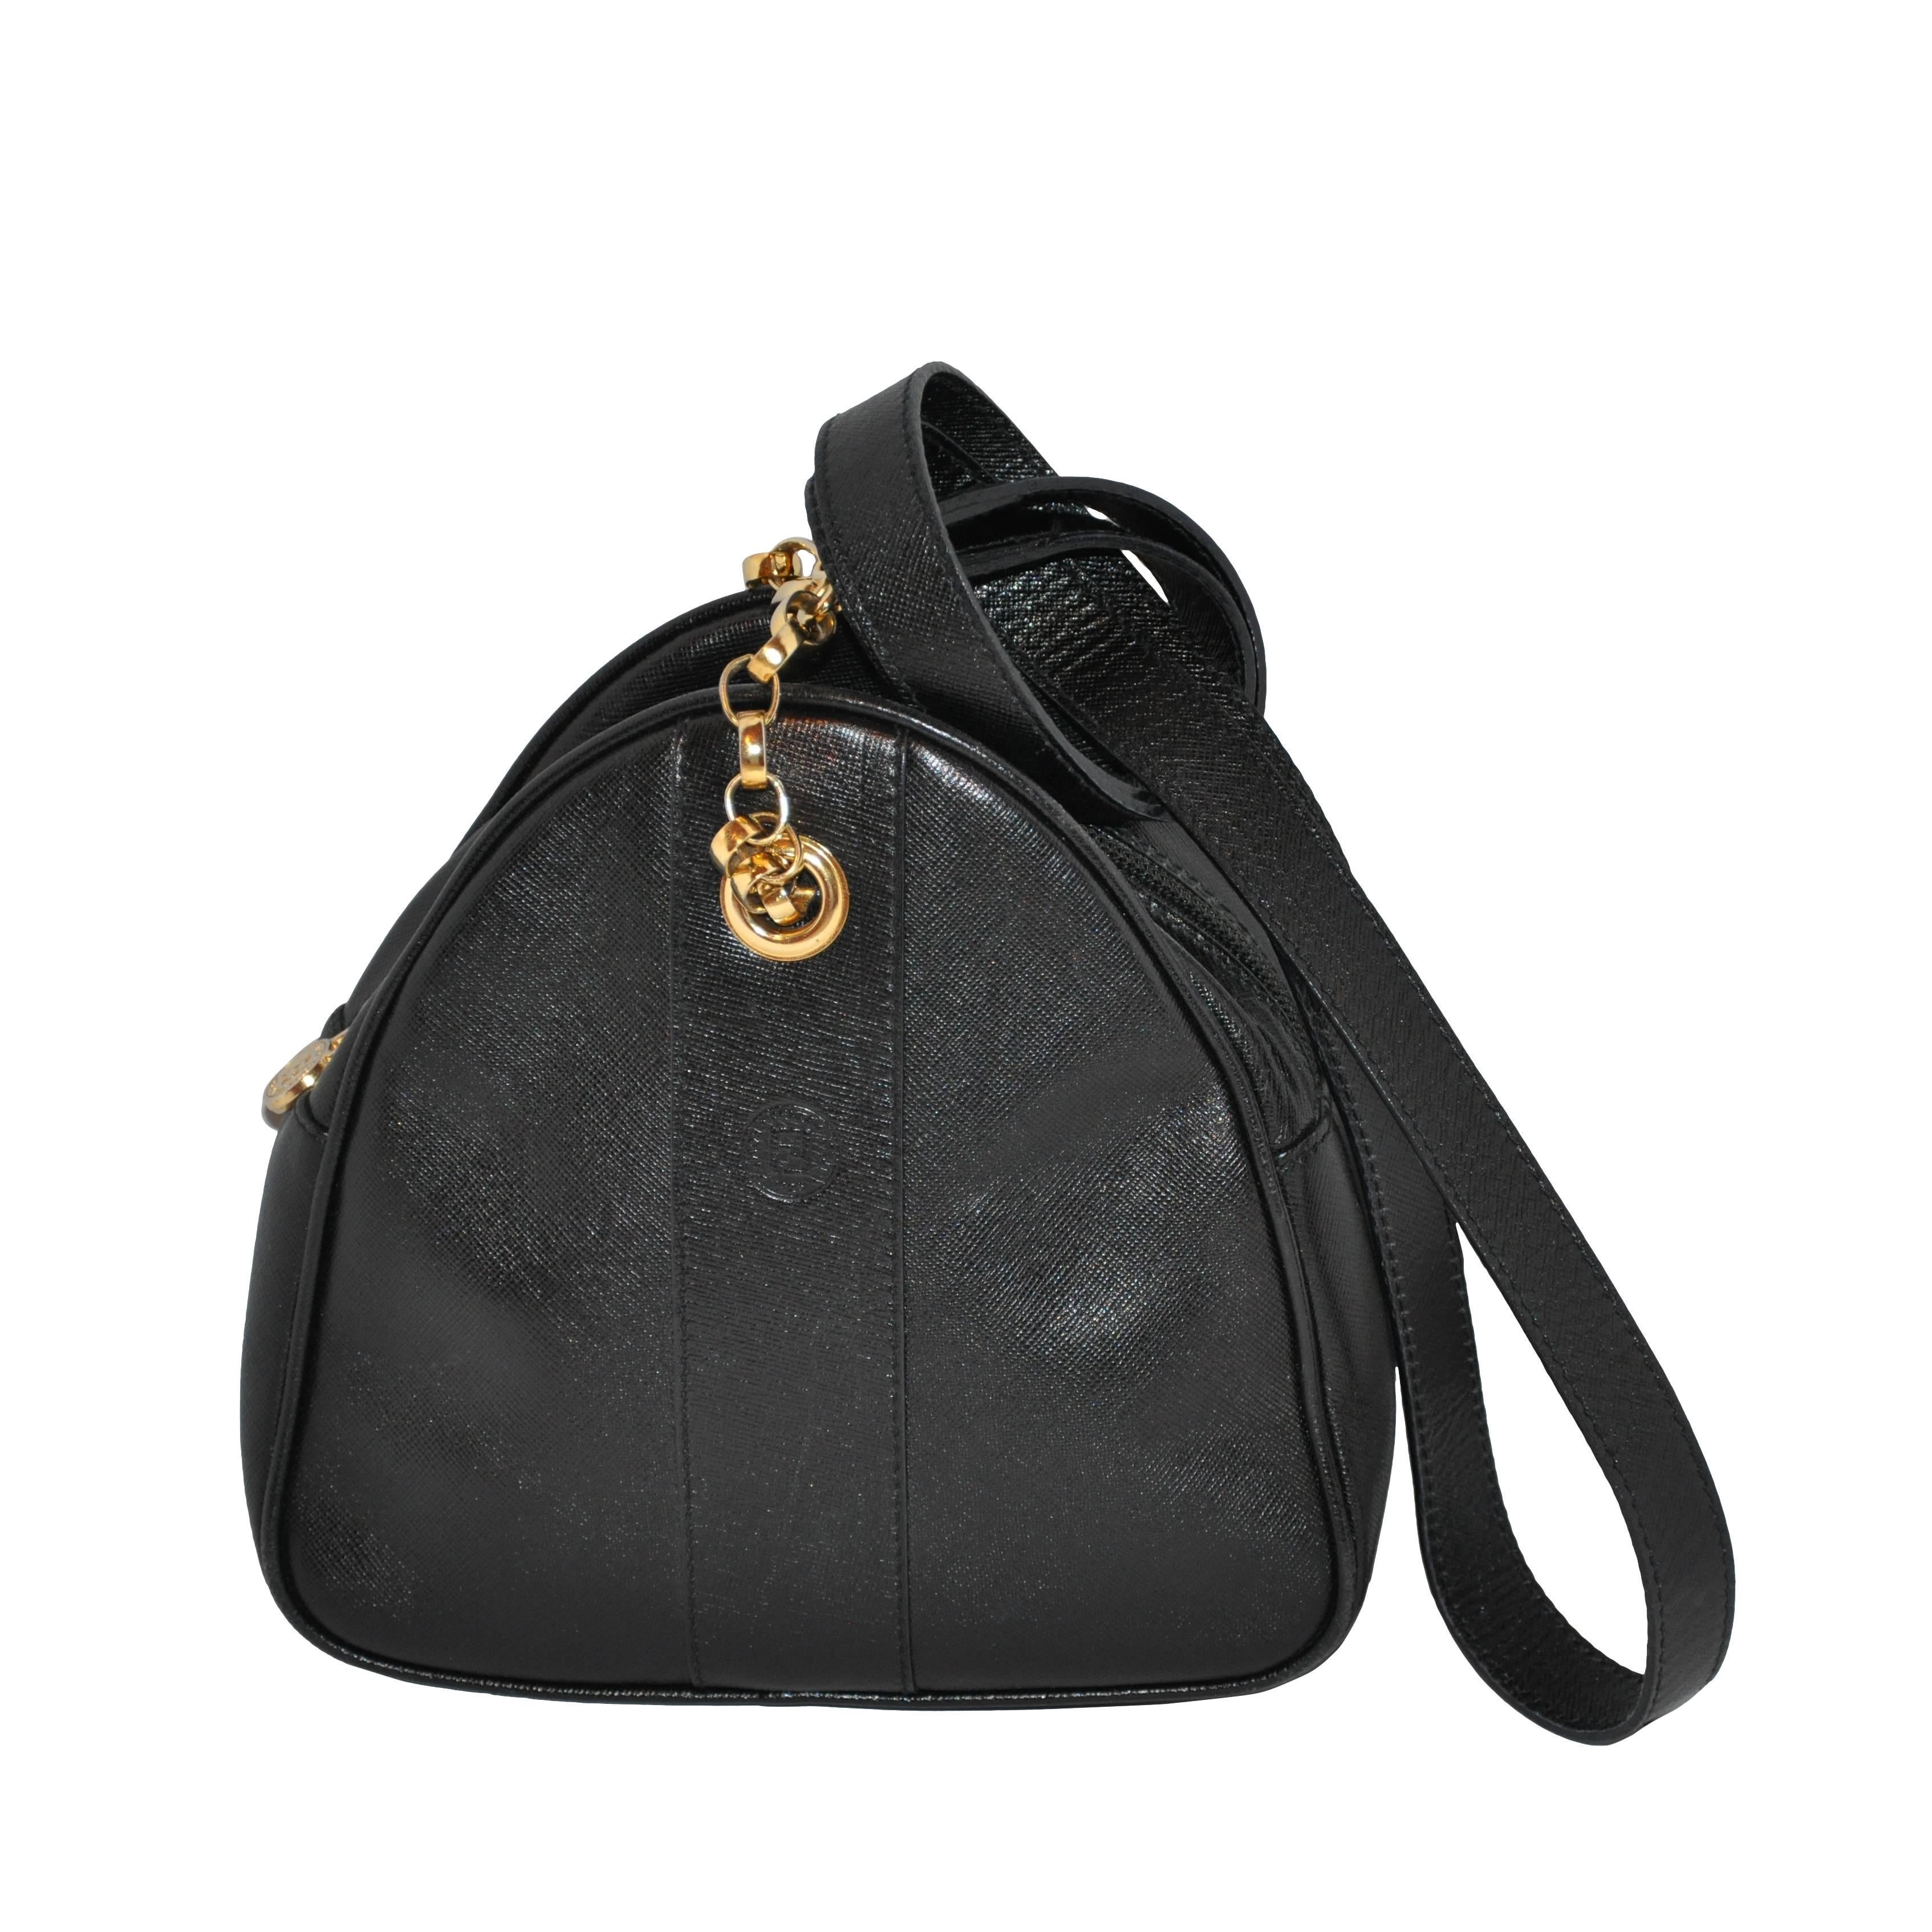 Fendi Black Textured Calfskin with Gold Hardware Small Shoulder Bag